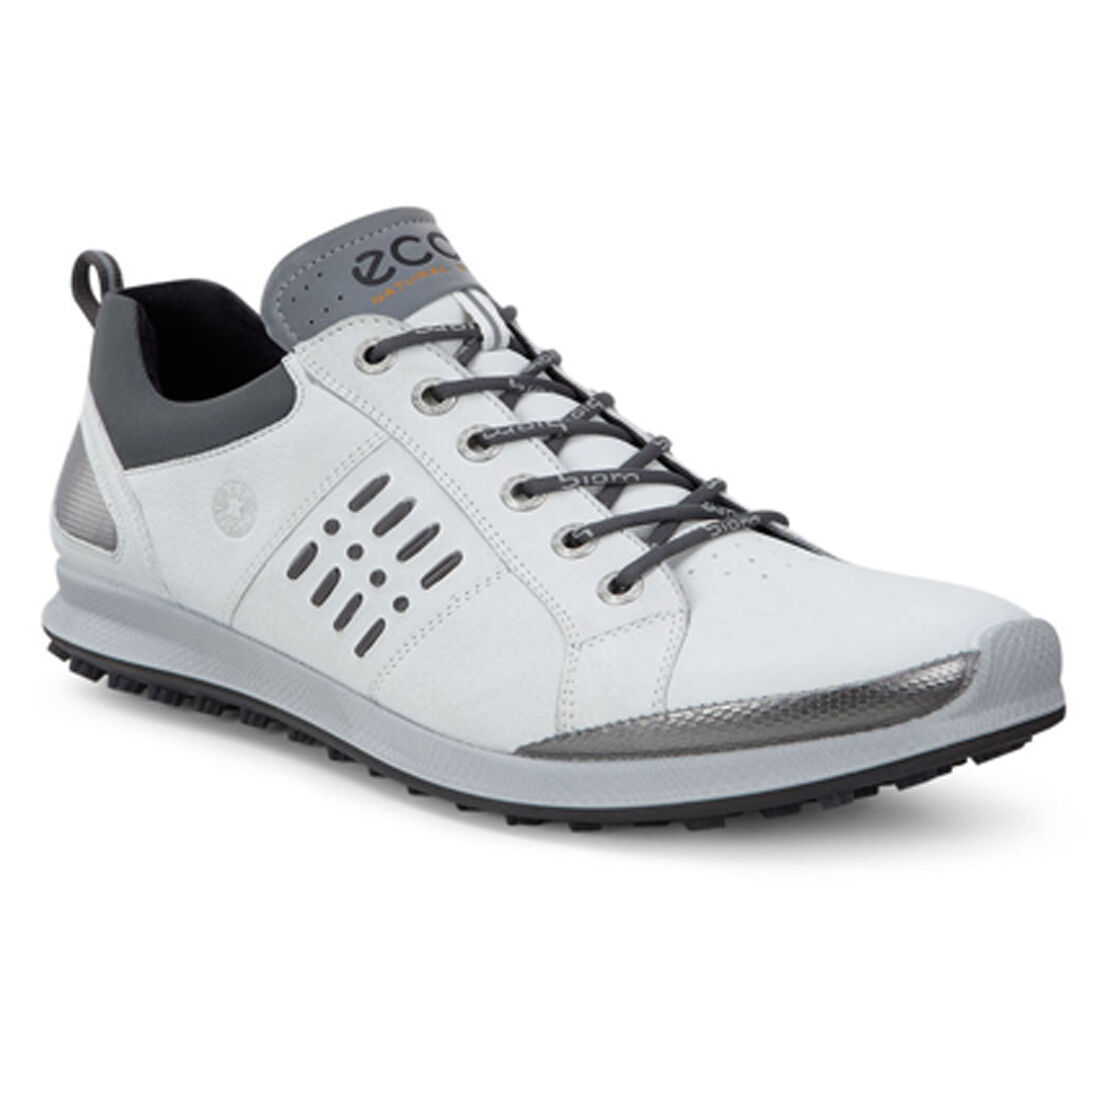 ECCO BIOM Hybrid 2 GTX Men's Golf Shoe 